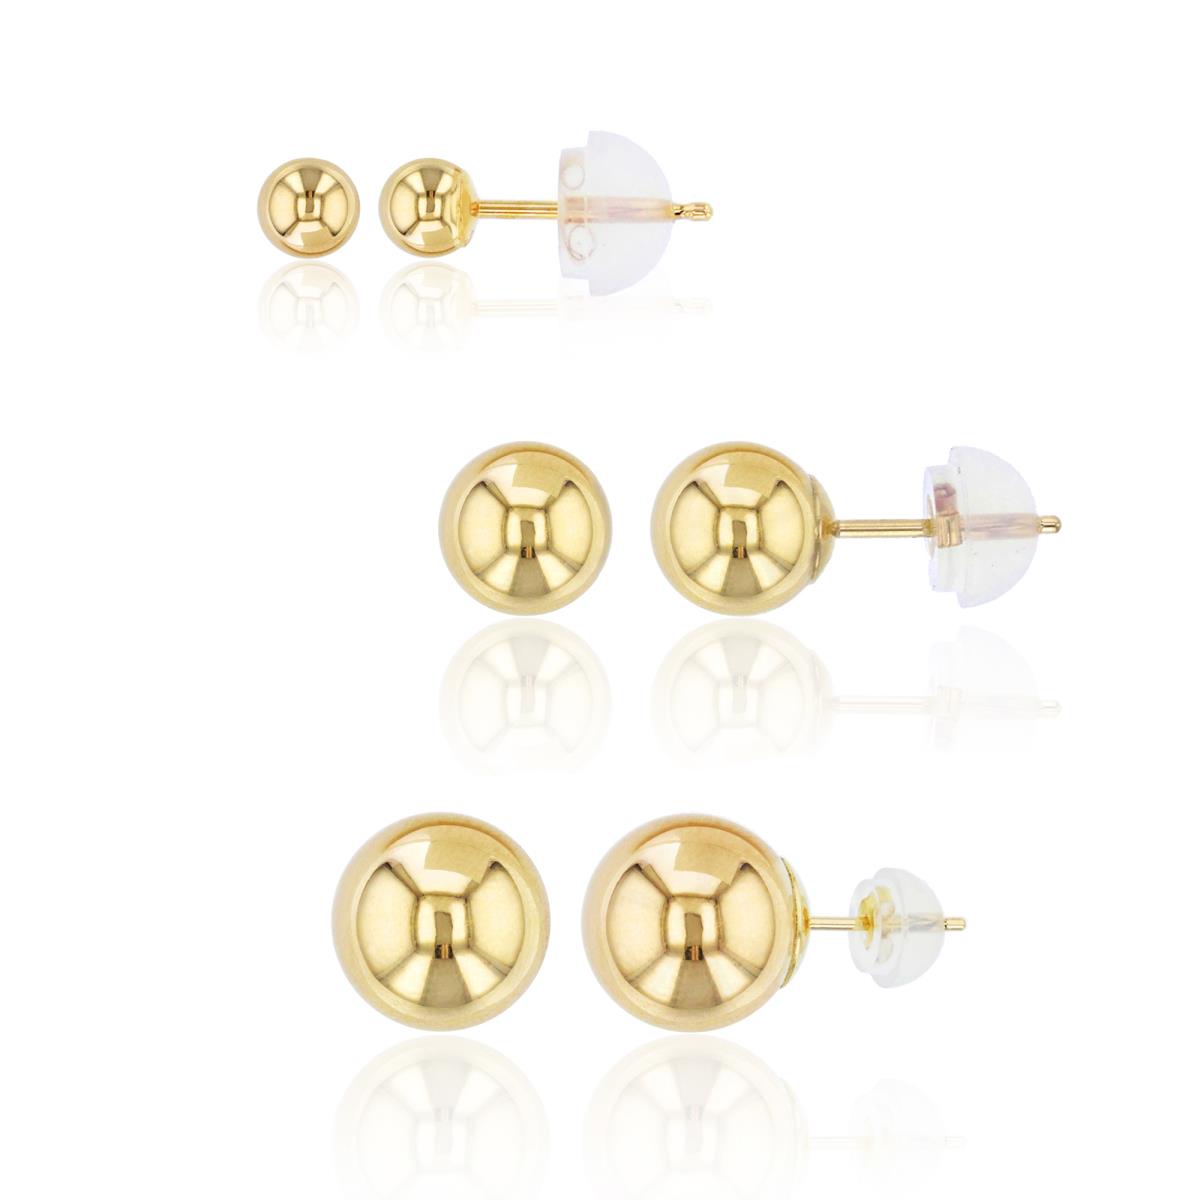 10K Gold Yellow 4,6,8MM Ball Stud Earring Set & 10K Silicone Backs